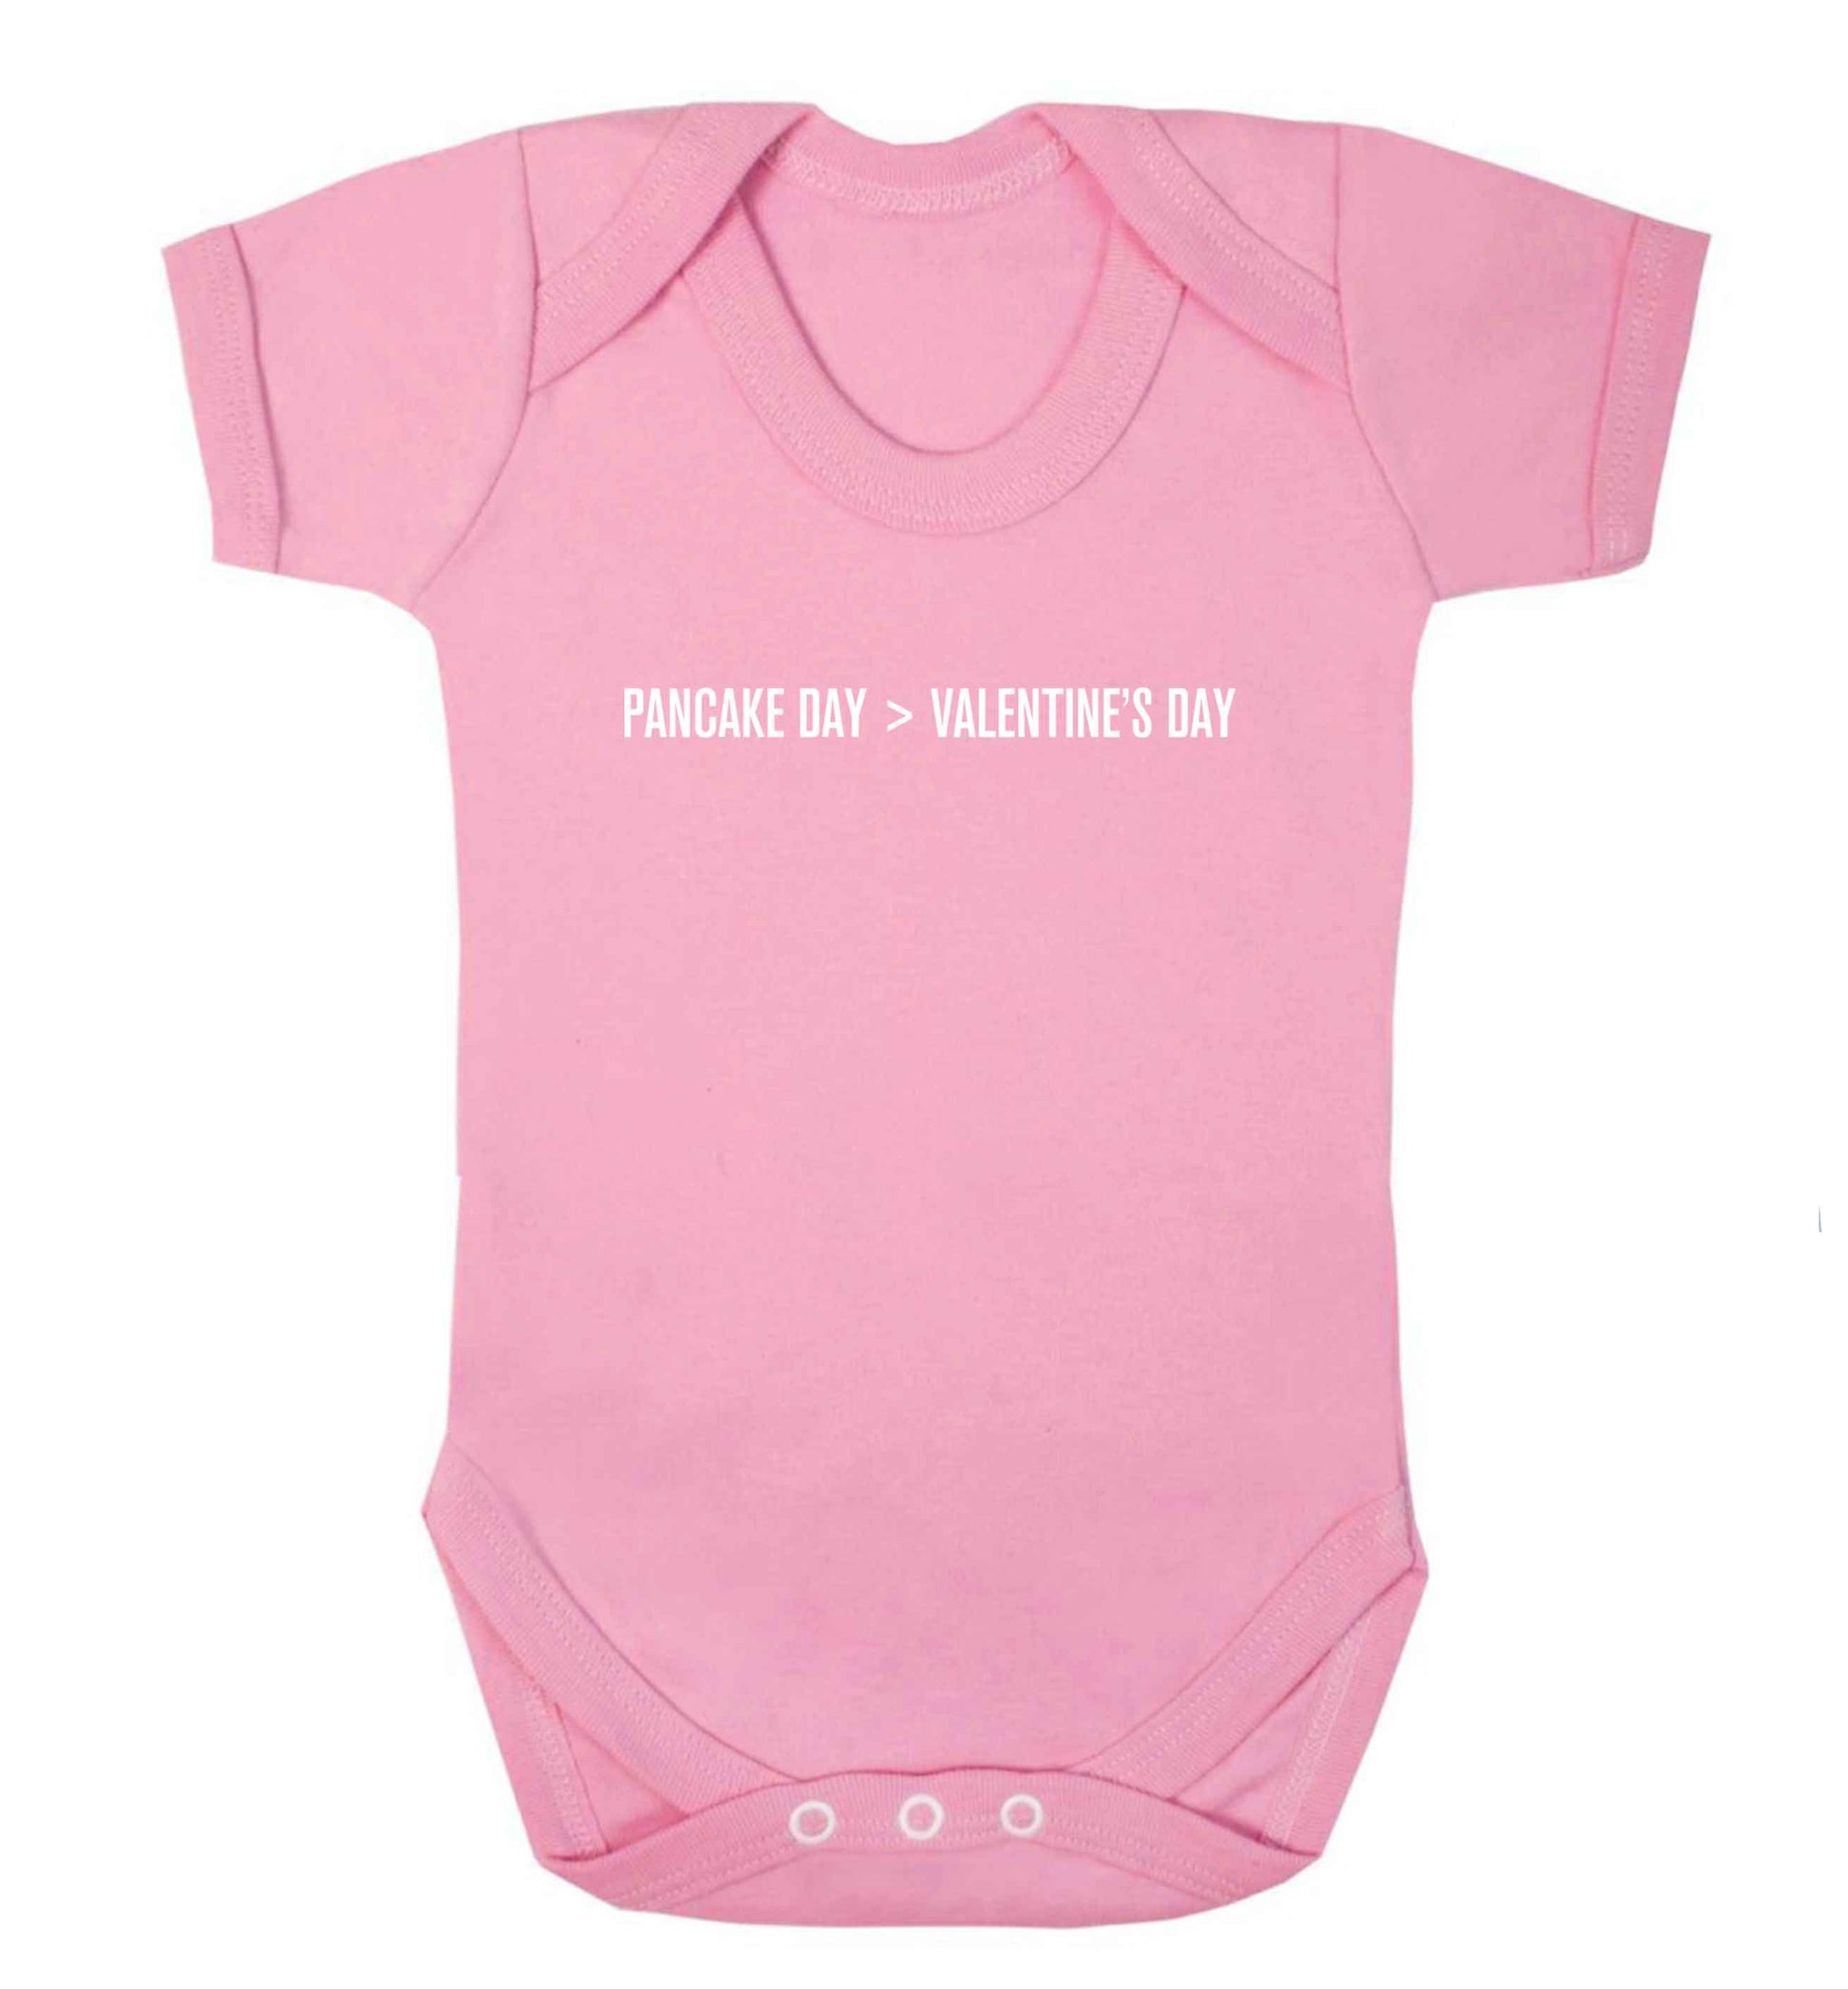 Pancake day > valentines day baby vest pale pink 18-24 months